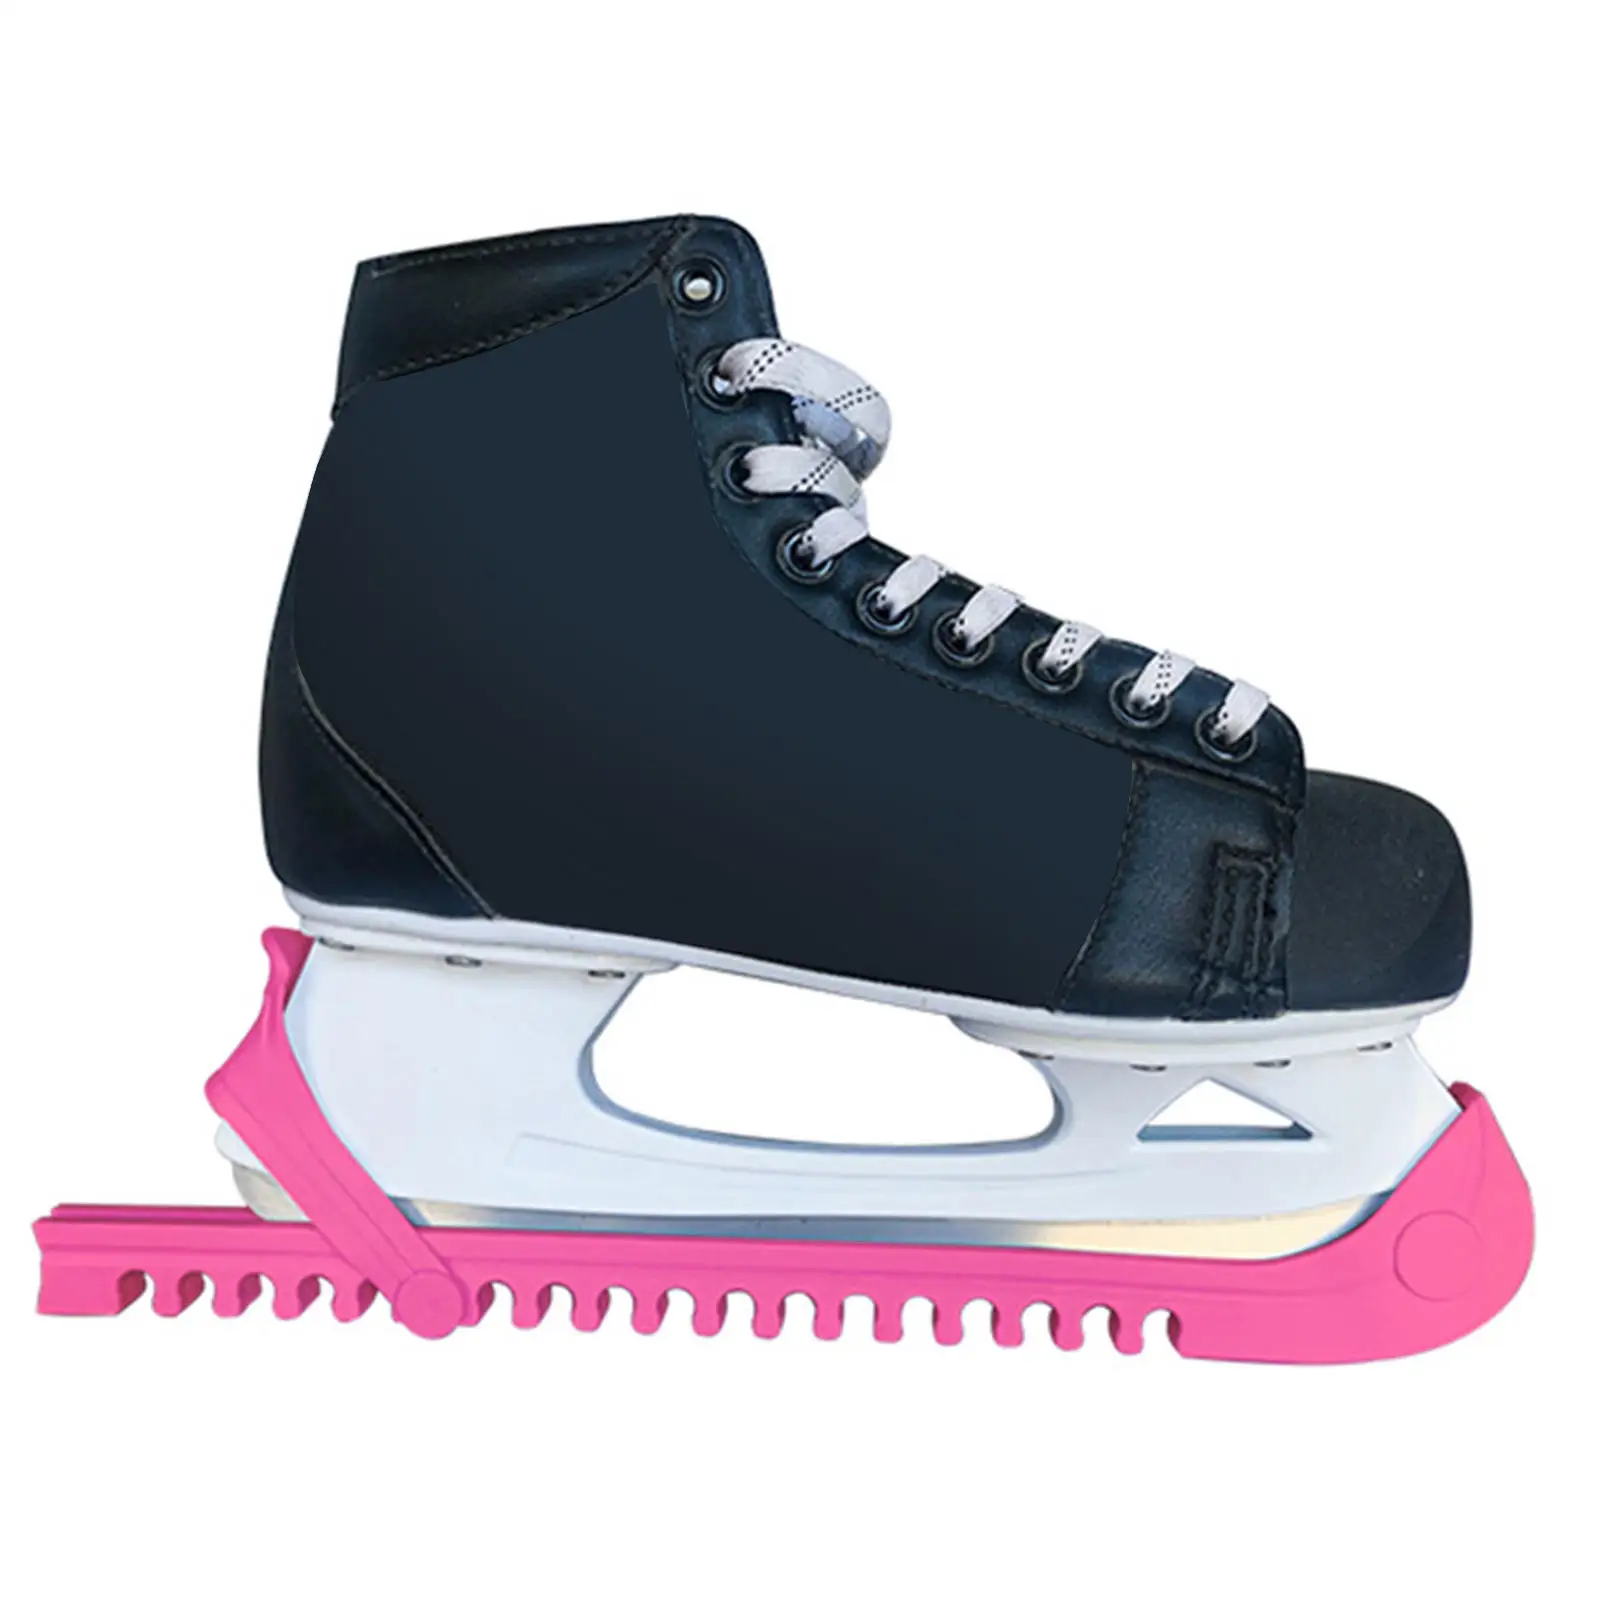 Premium Ice Skate Blade Guards, Adjustable Protective Hockey Figure Skating Blade Walking Covers Protection Sleeves